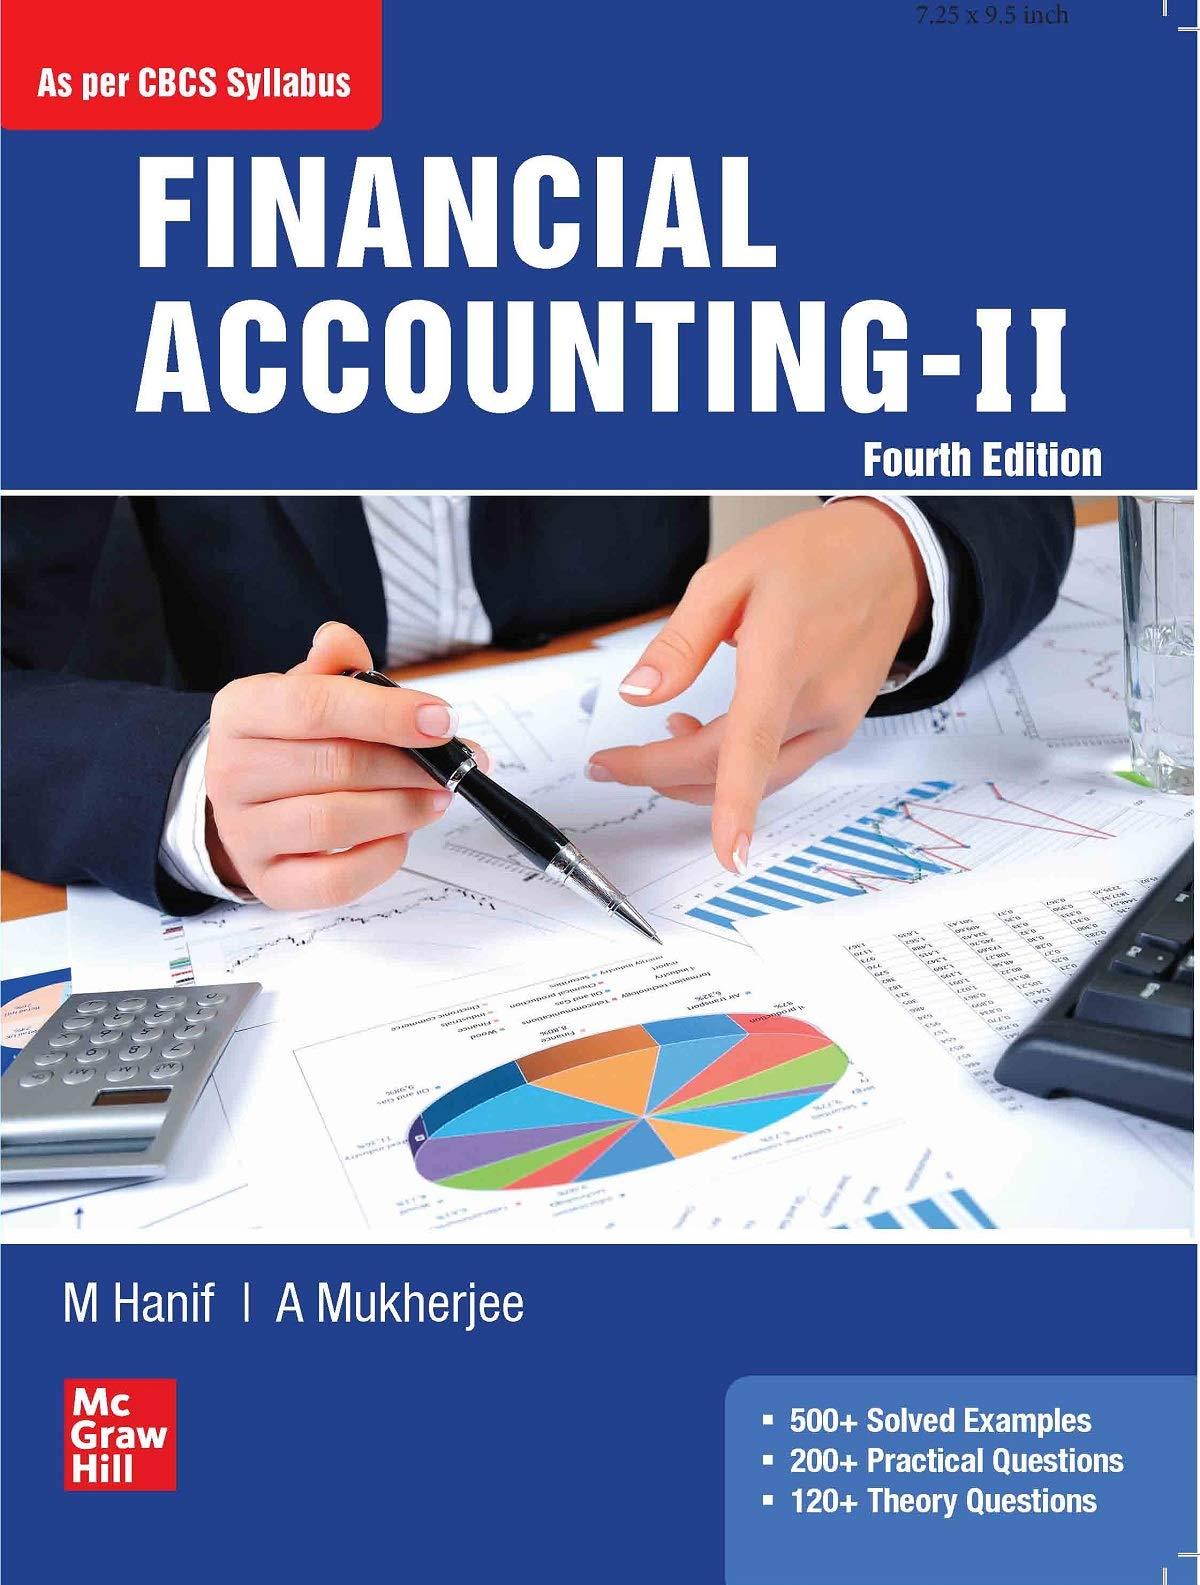 financial accounting volume ii 4th edition mohamed hanif, amitabha mukherjee 9387886239, 978-9387886230